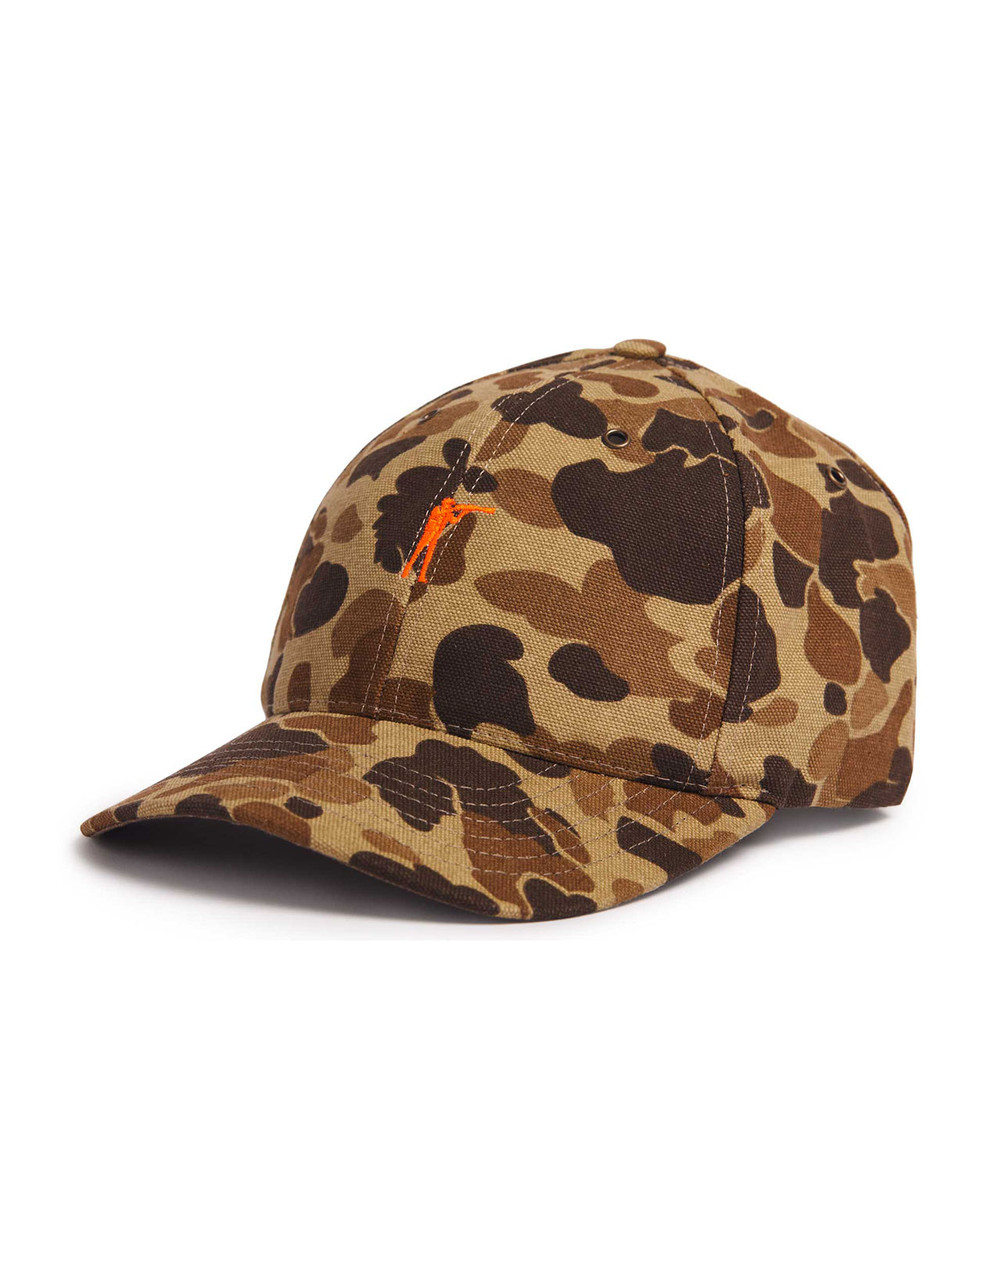 Shop Duck Hunting Hats - Camo Hunting Hats